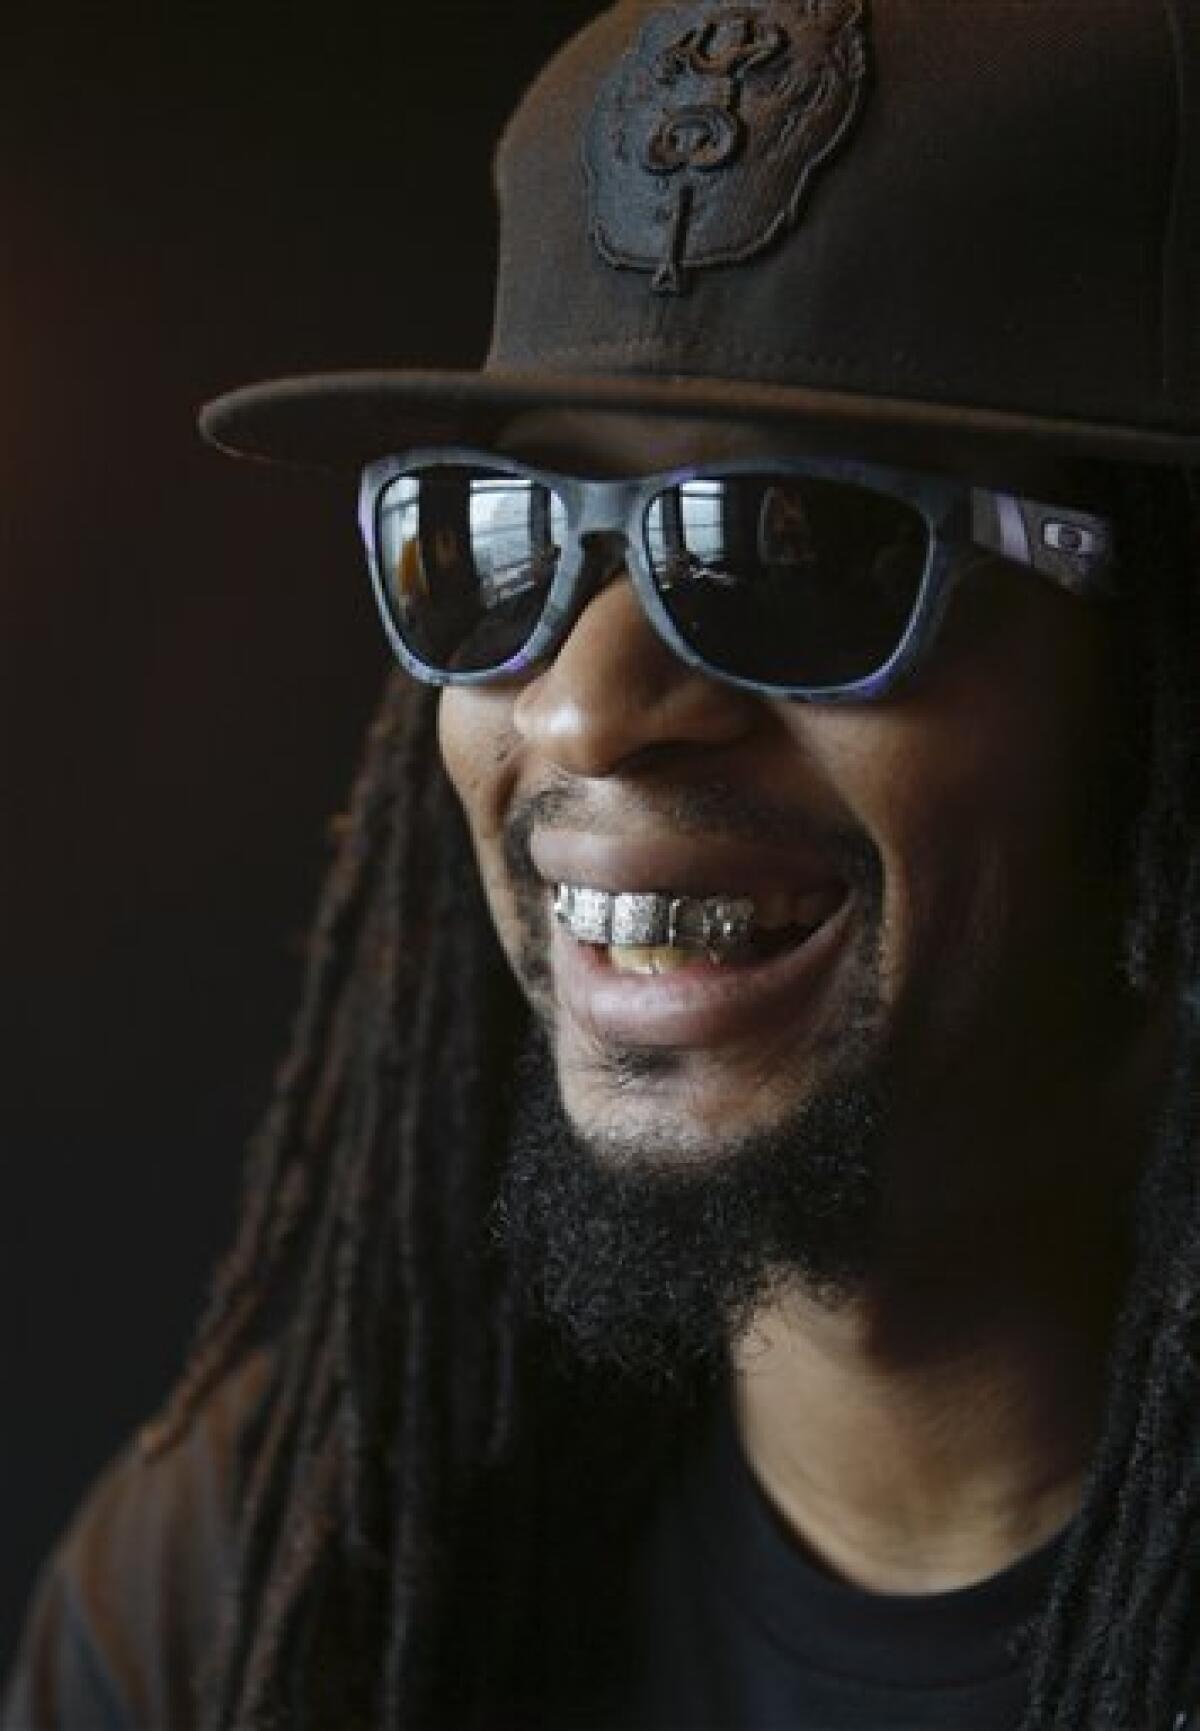 Rapper Lil Jon sets out to complete new album - The San Diego Union-Tribune